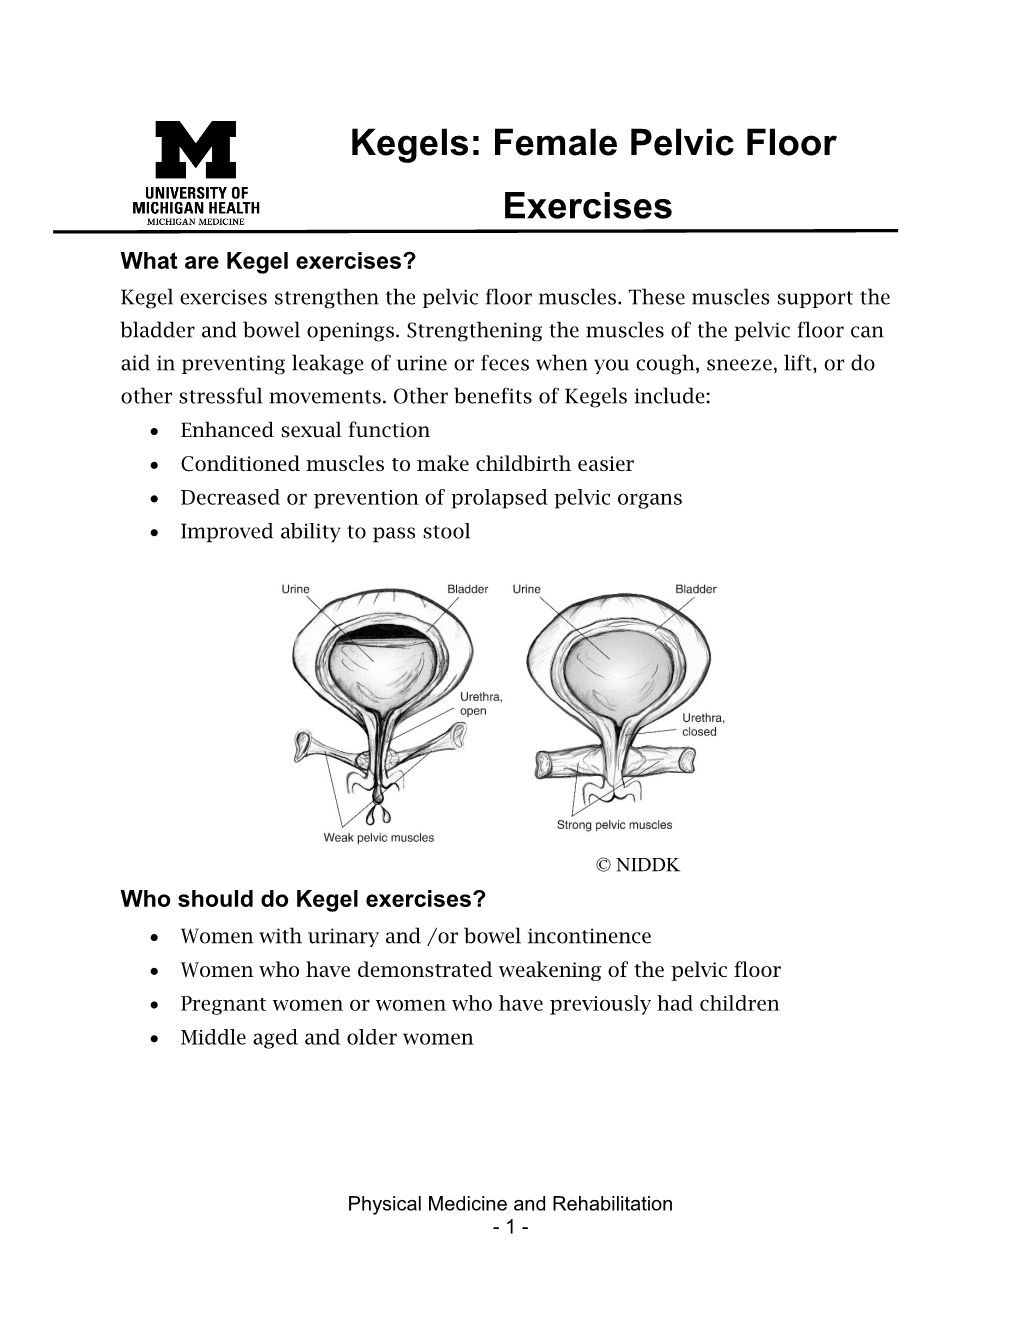 Kegels: Female Pelvic Floor Exercises What Are Kegel Exercises? Kegel Exercises Strengthen the Pelvic Floor Muscles